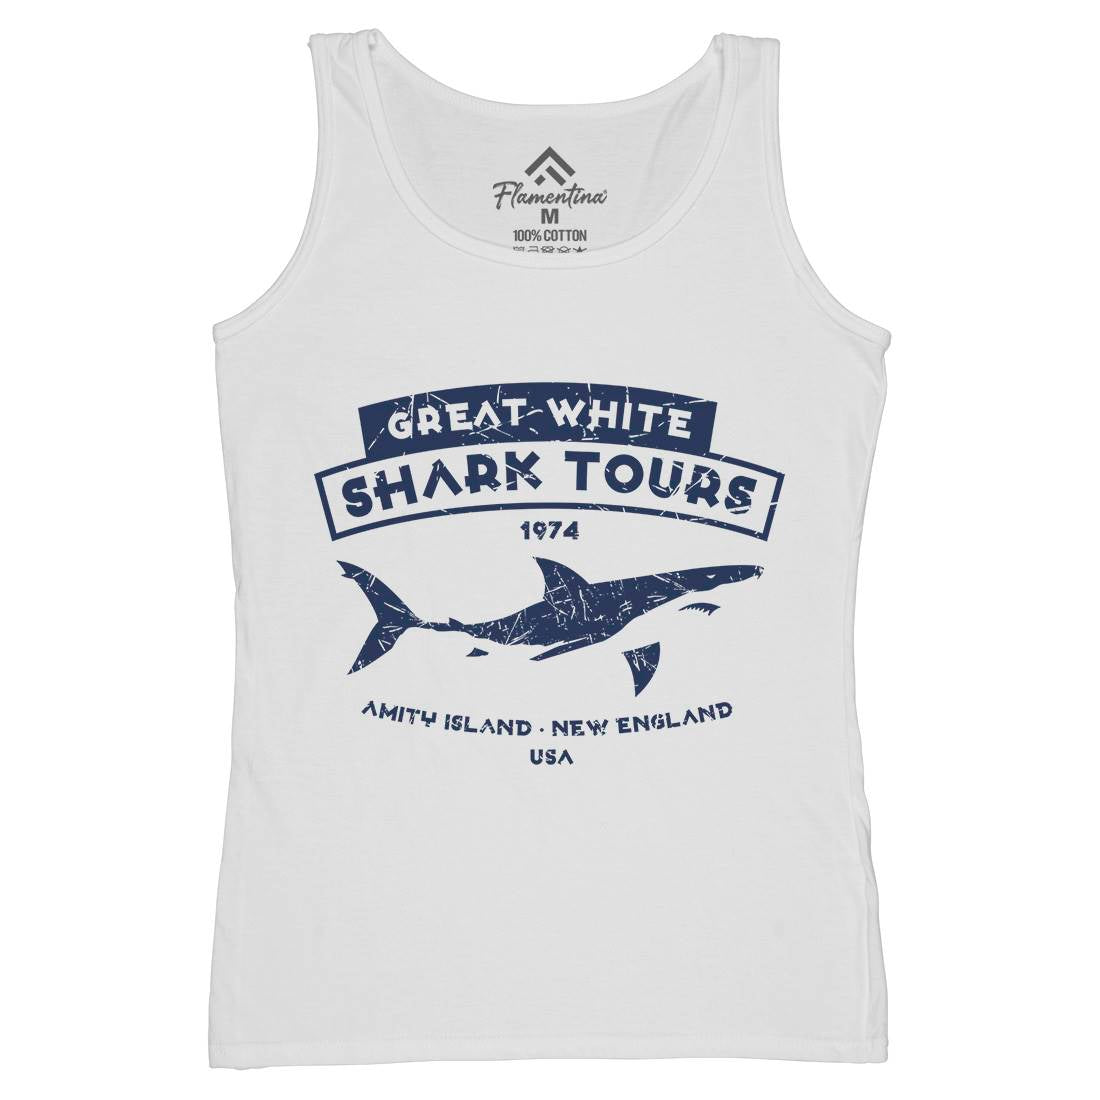 Great White Shark Tours Womens Organic Tank Top Vest Navy D348